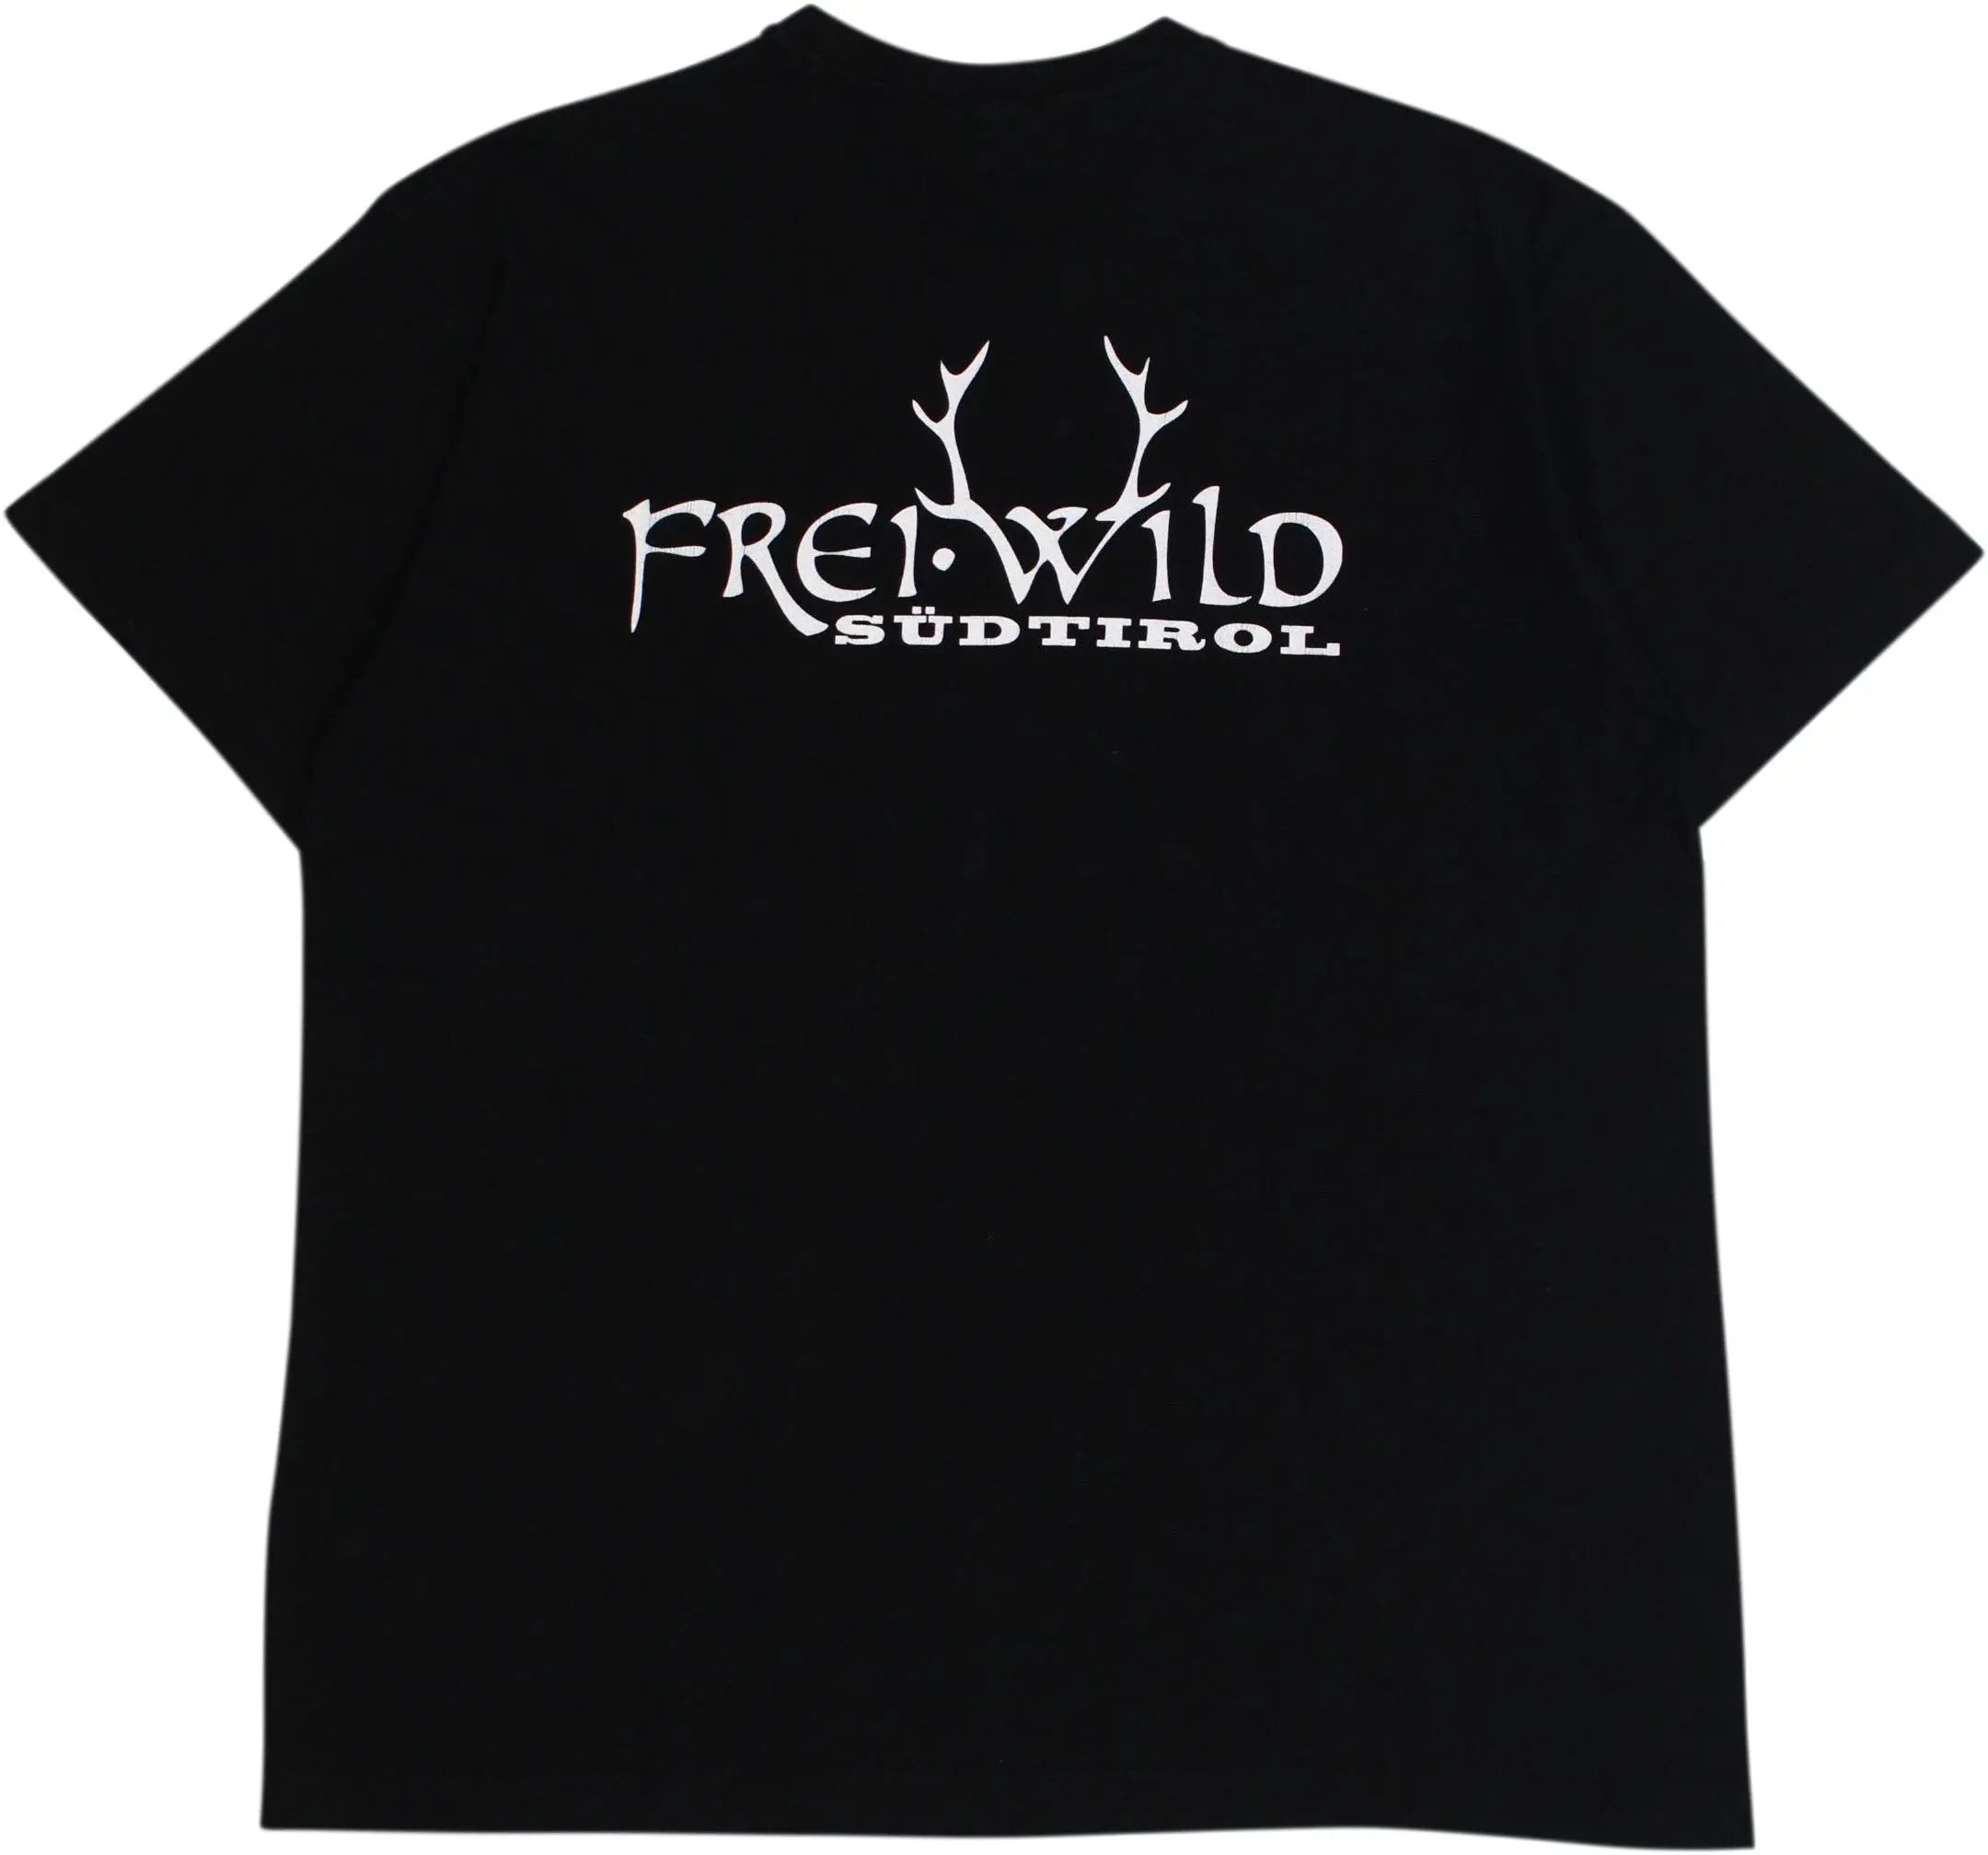 Frei Wild - Frei Wild Süd Tirol T-shirt- ThriftTale.com - Vintage and second handclothing